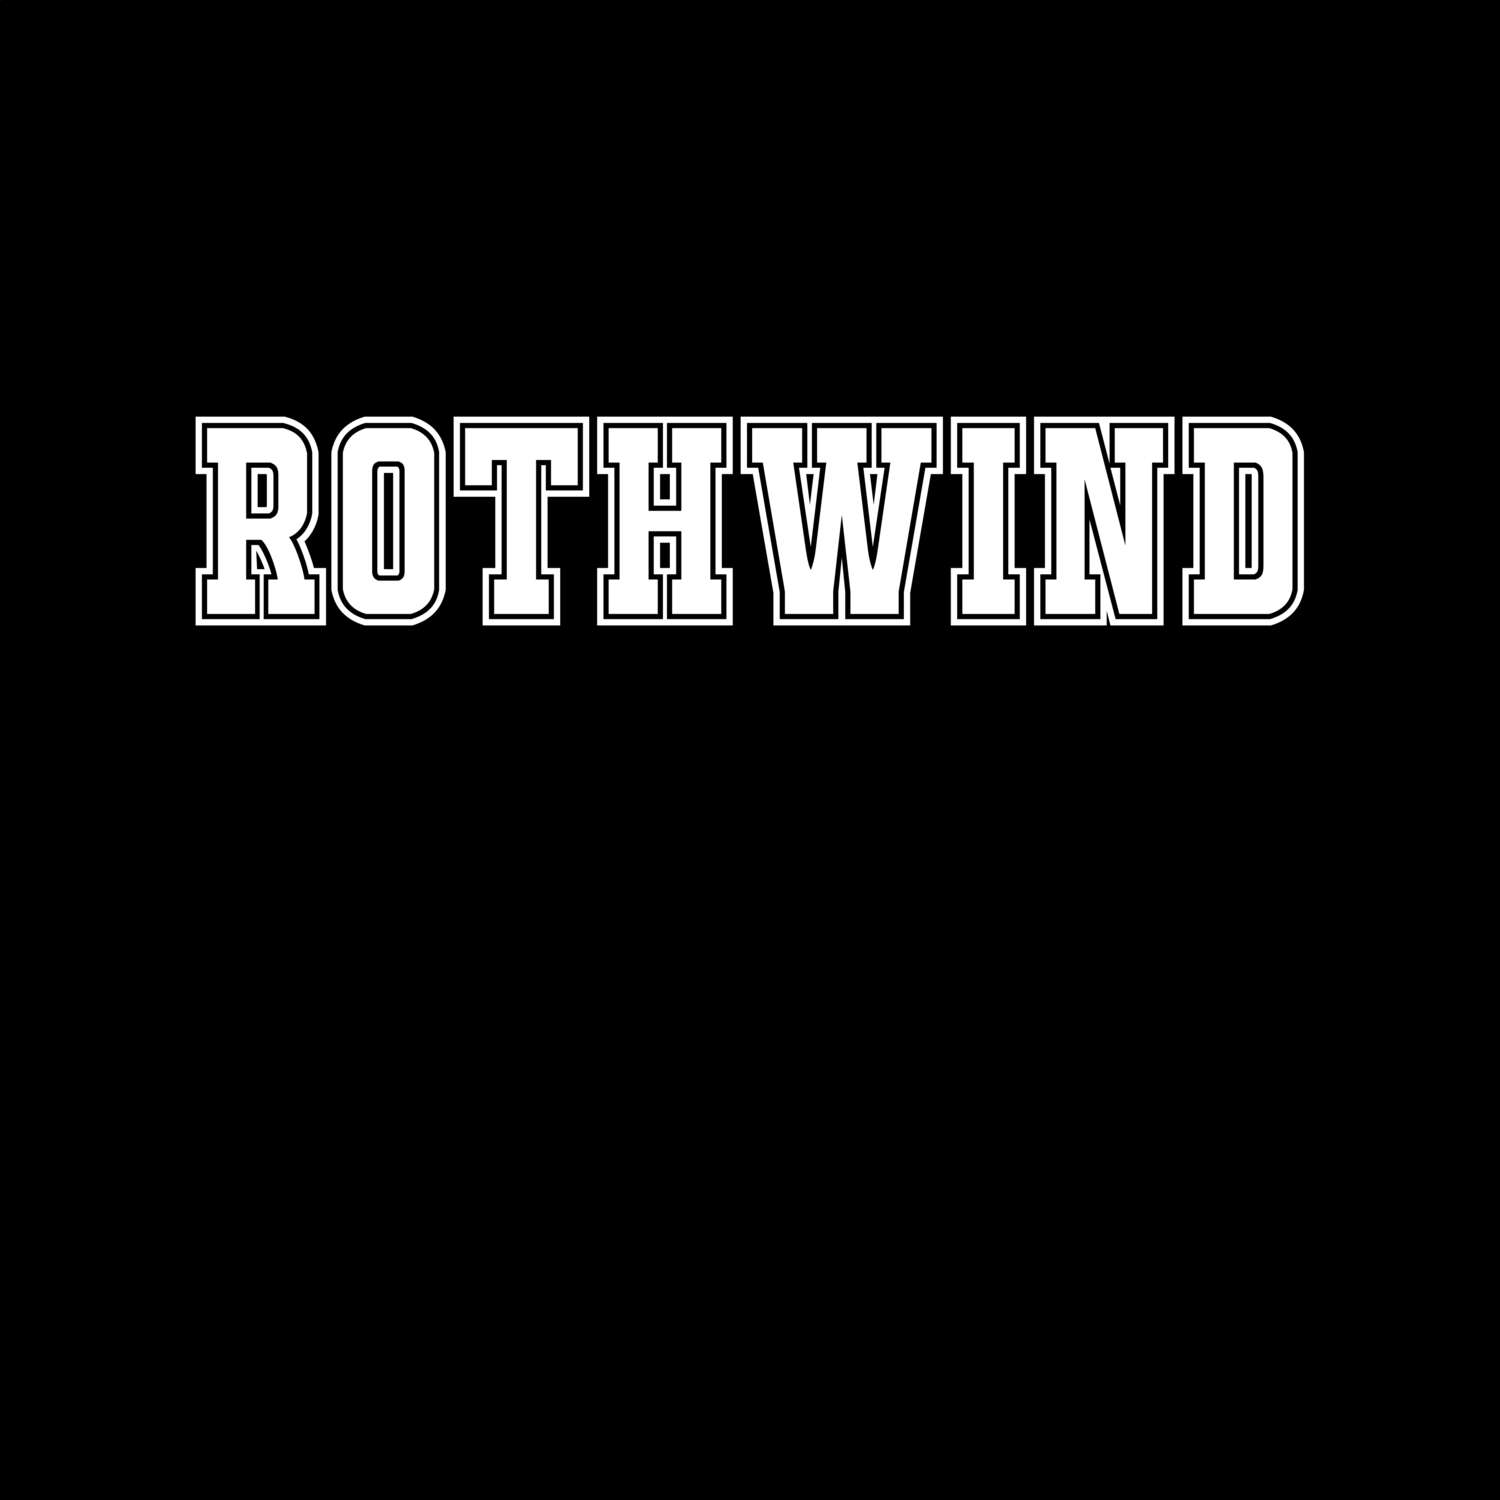 Rothwind T-Shirt »Classic«